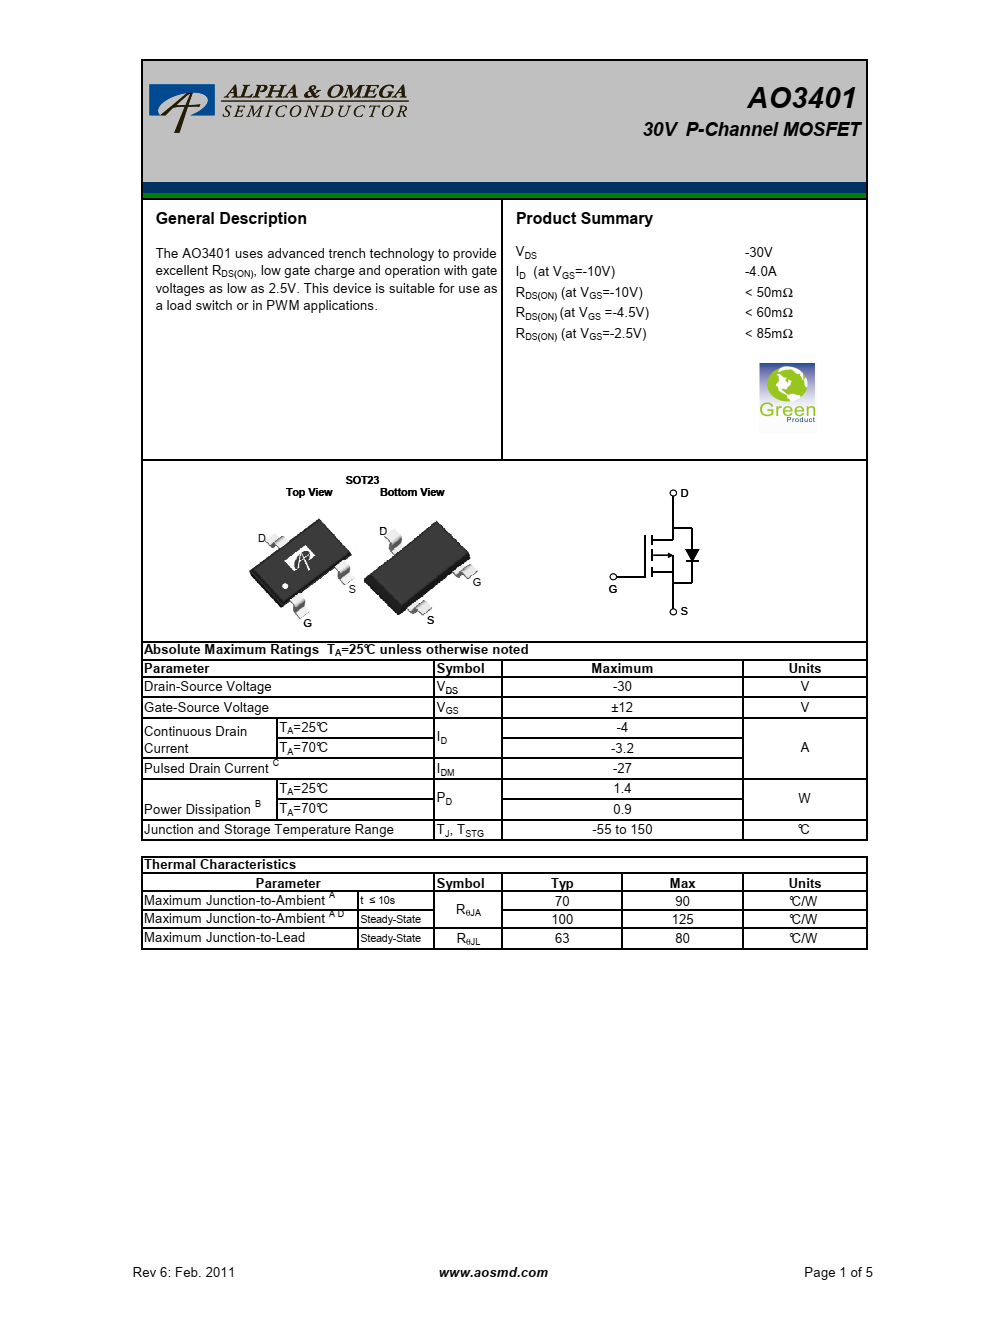 AO3401采用先进的沟槽技术，提供卓越的RDS（ON）、低栅极电荷和低至2.5V的栅极电压运行